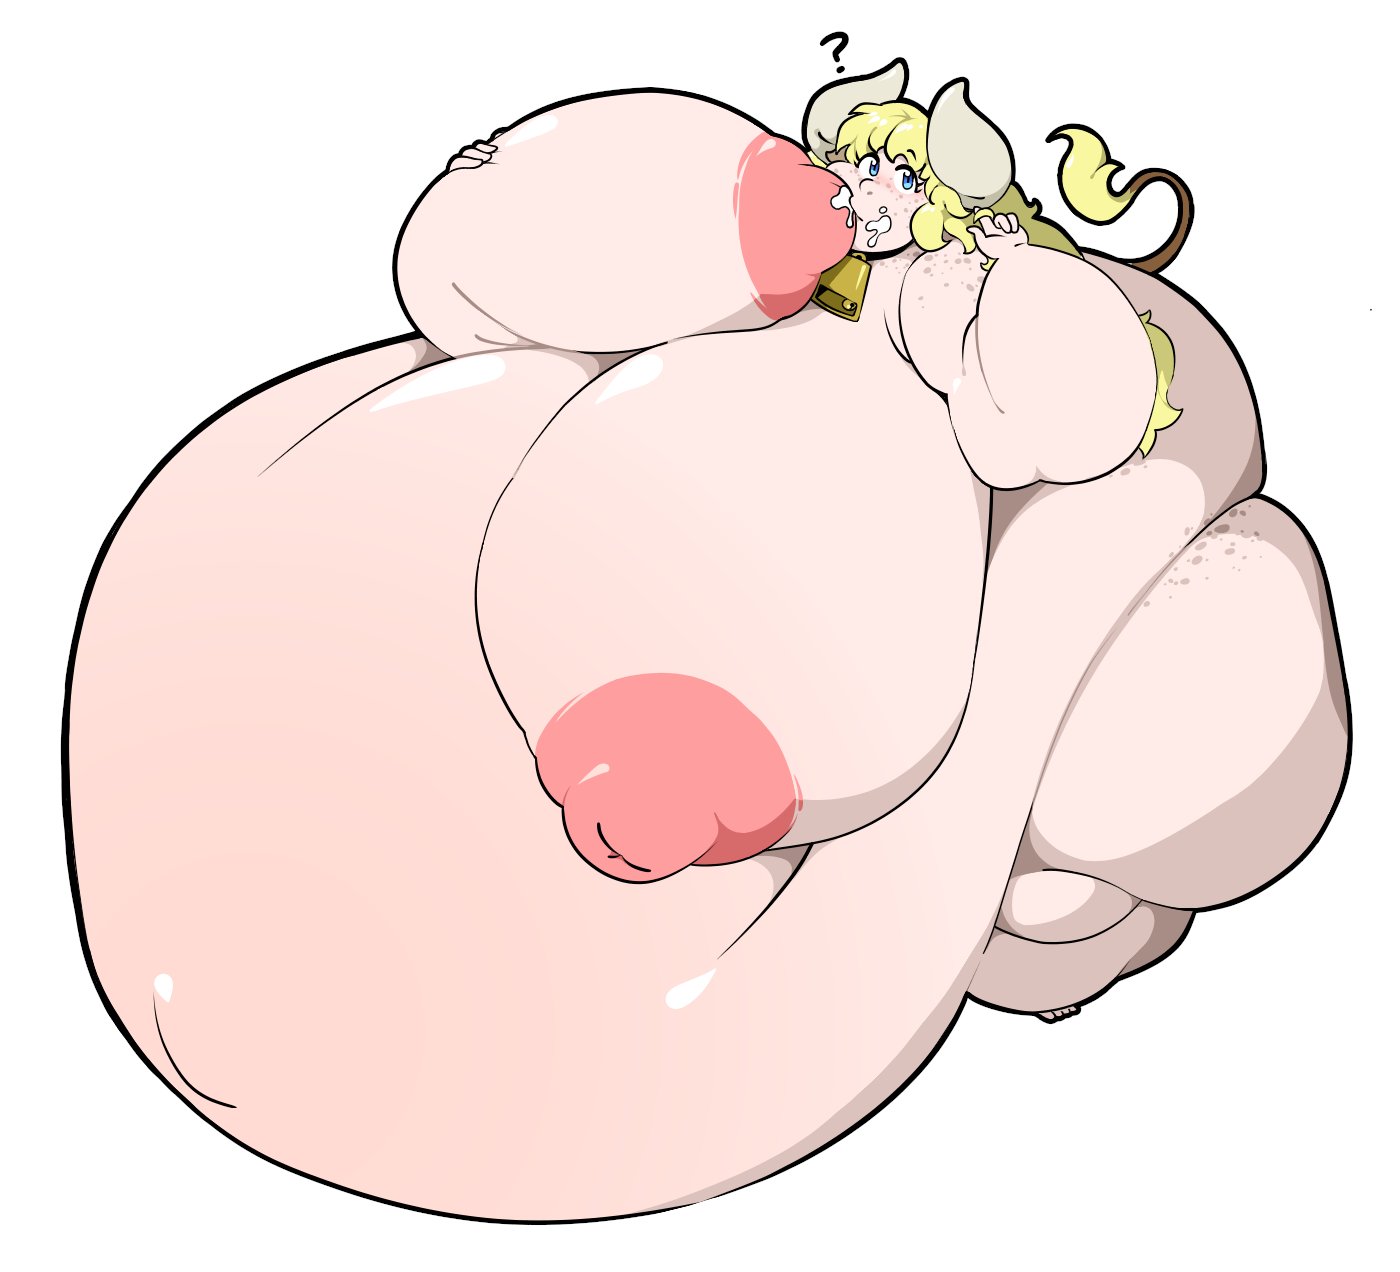 Fat Princess Peach by 40099 on DeviantArt